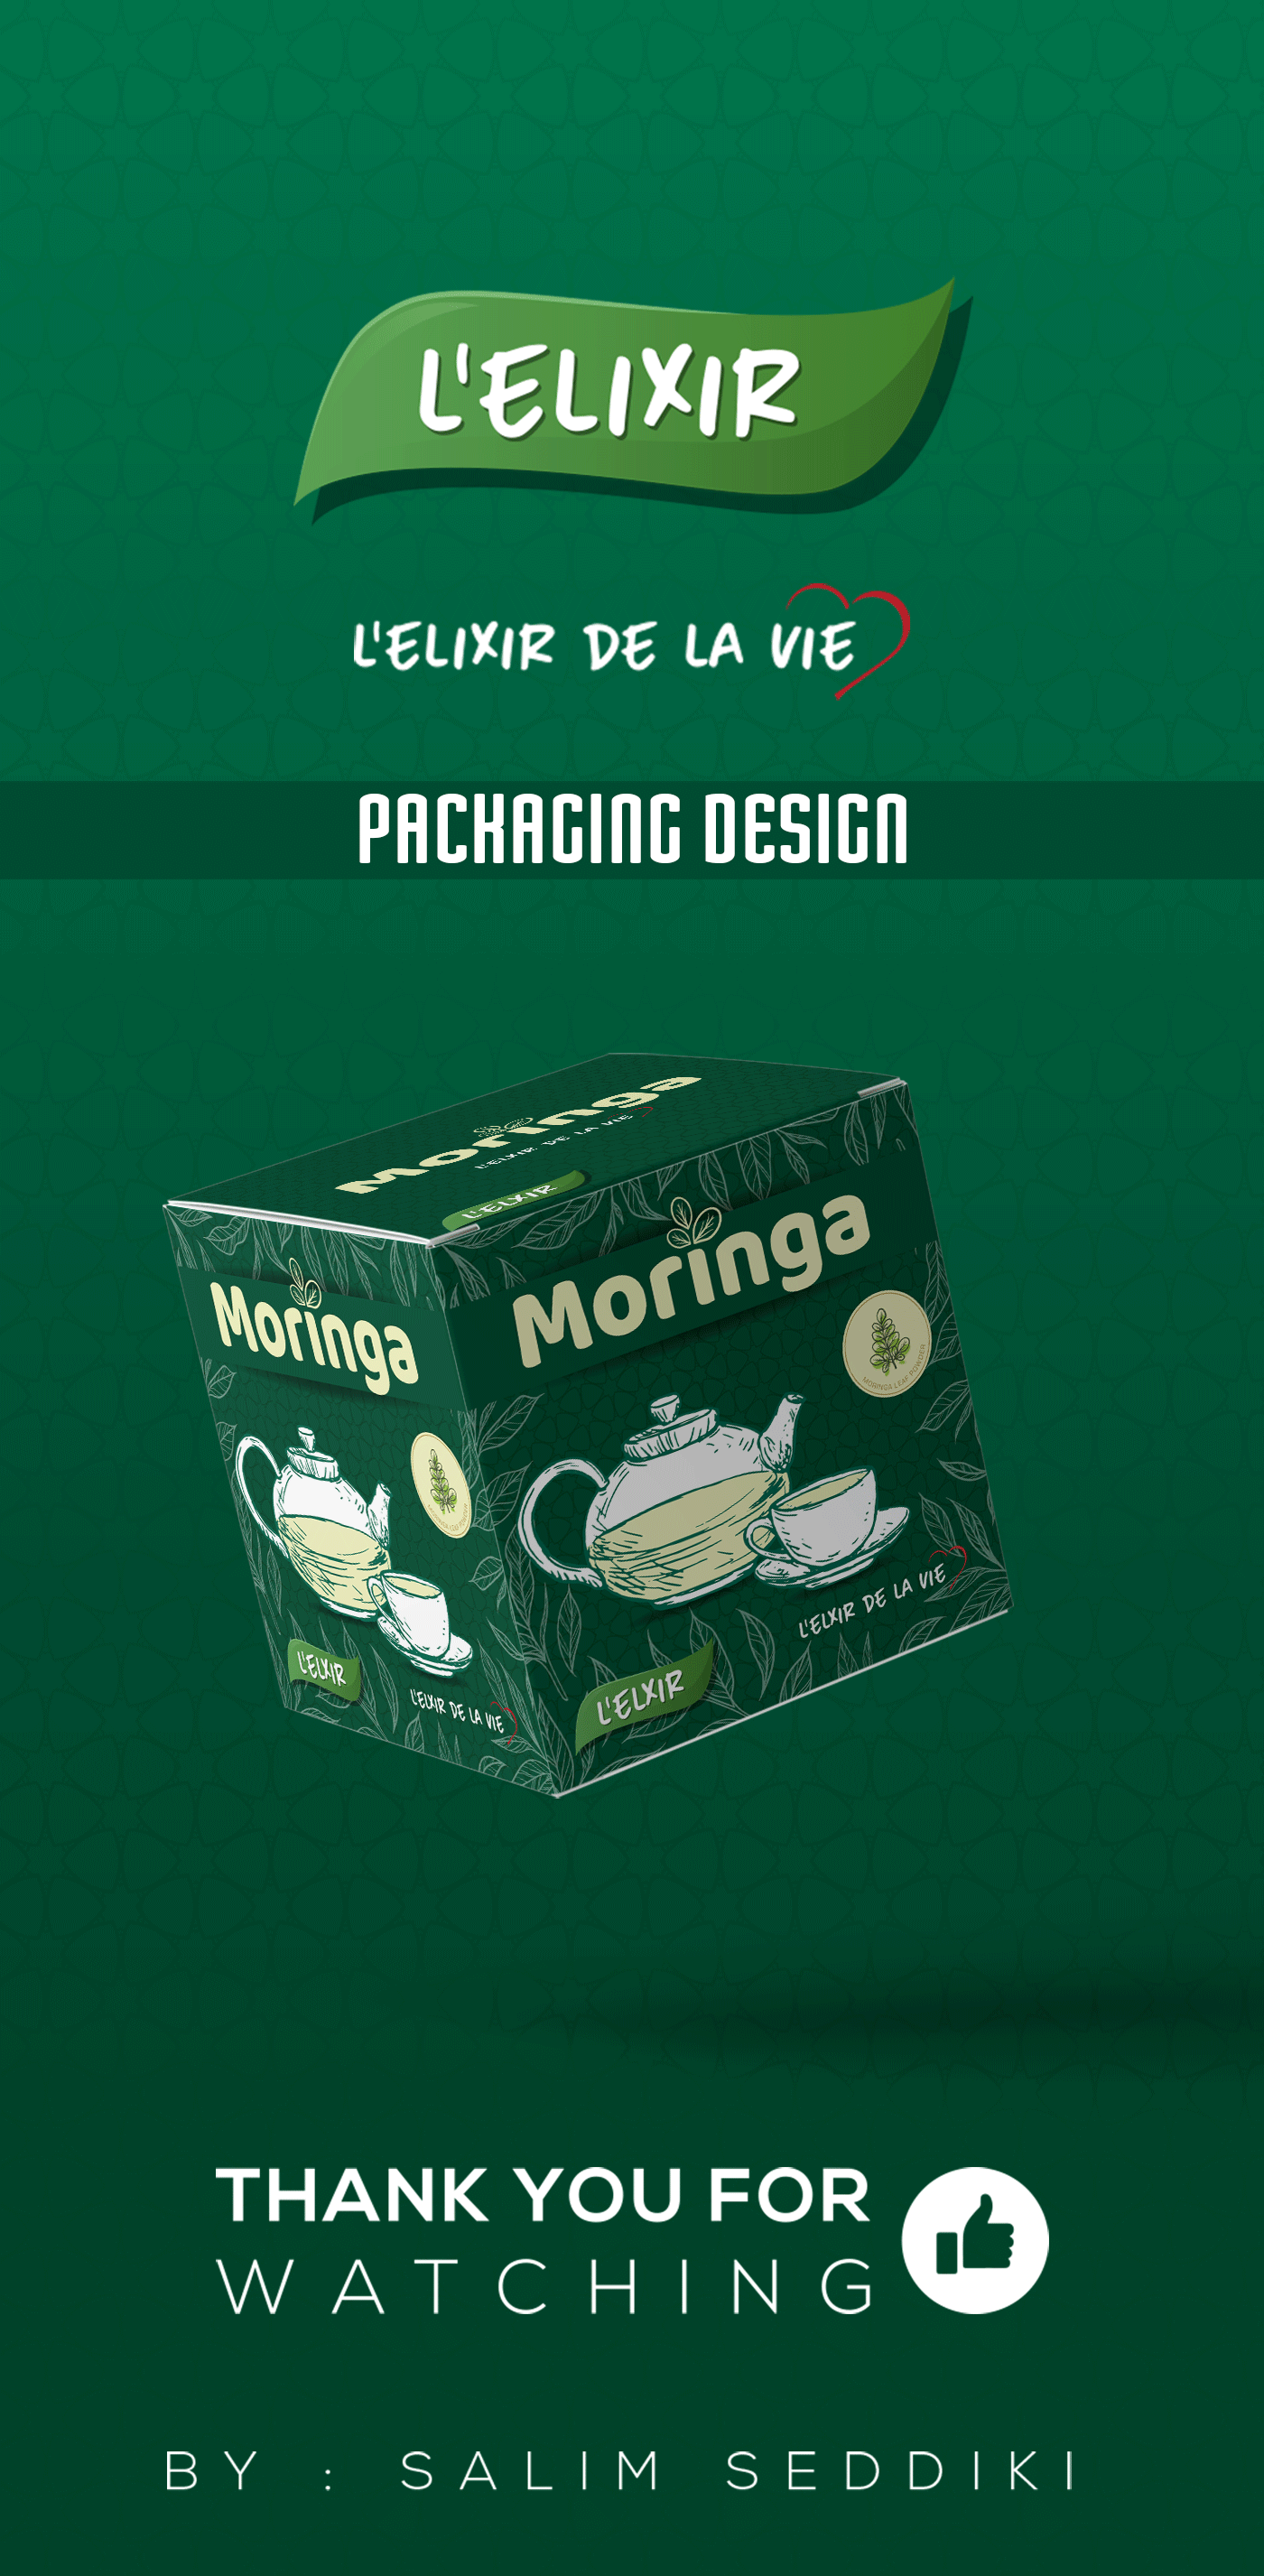 cinema 4d design elixier moringa Packging photoshop tea